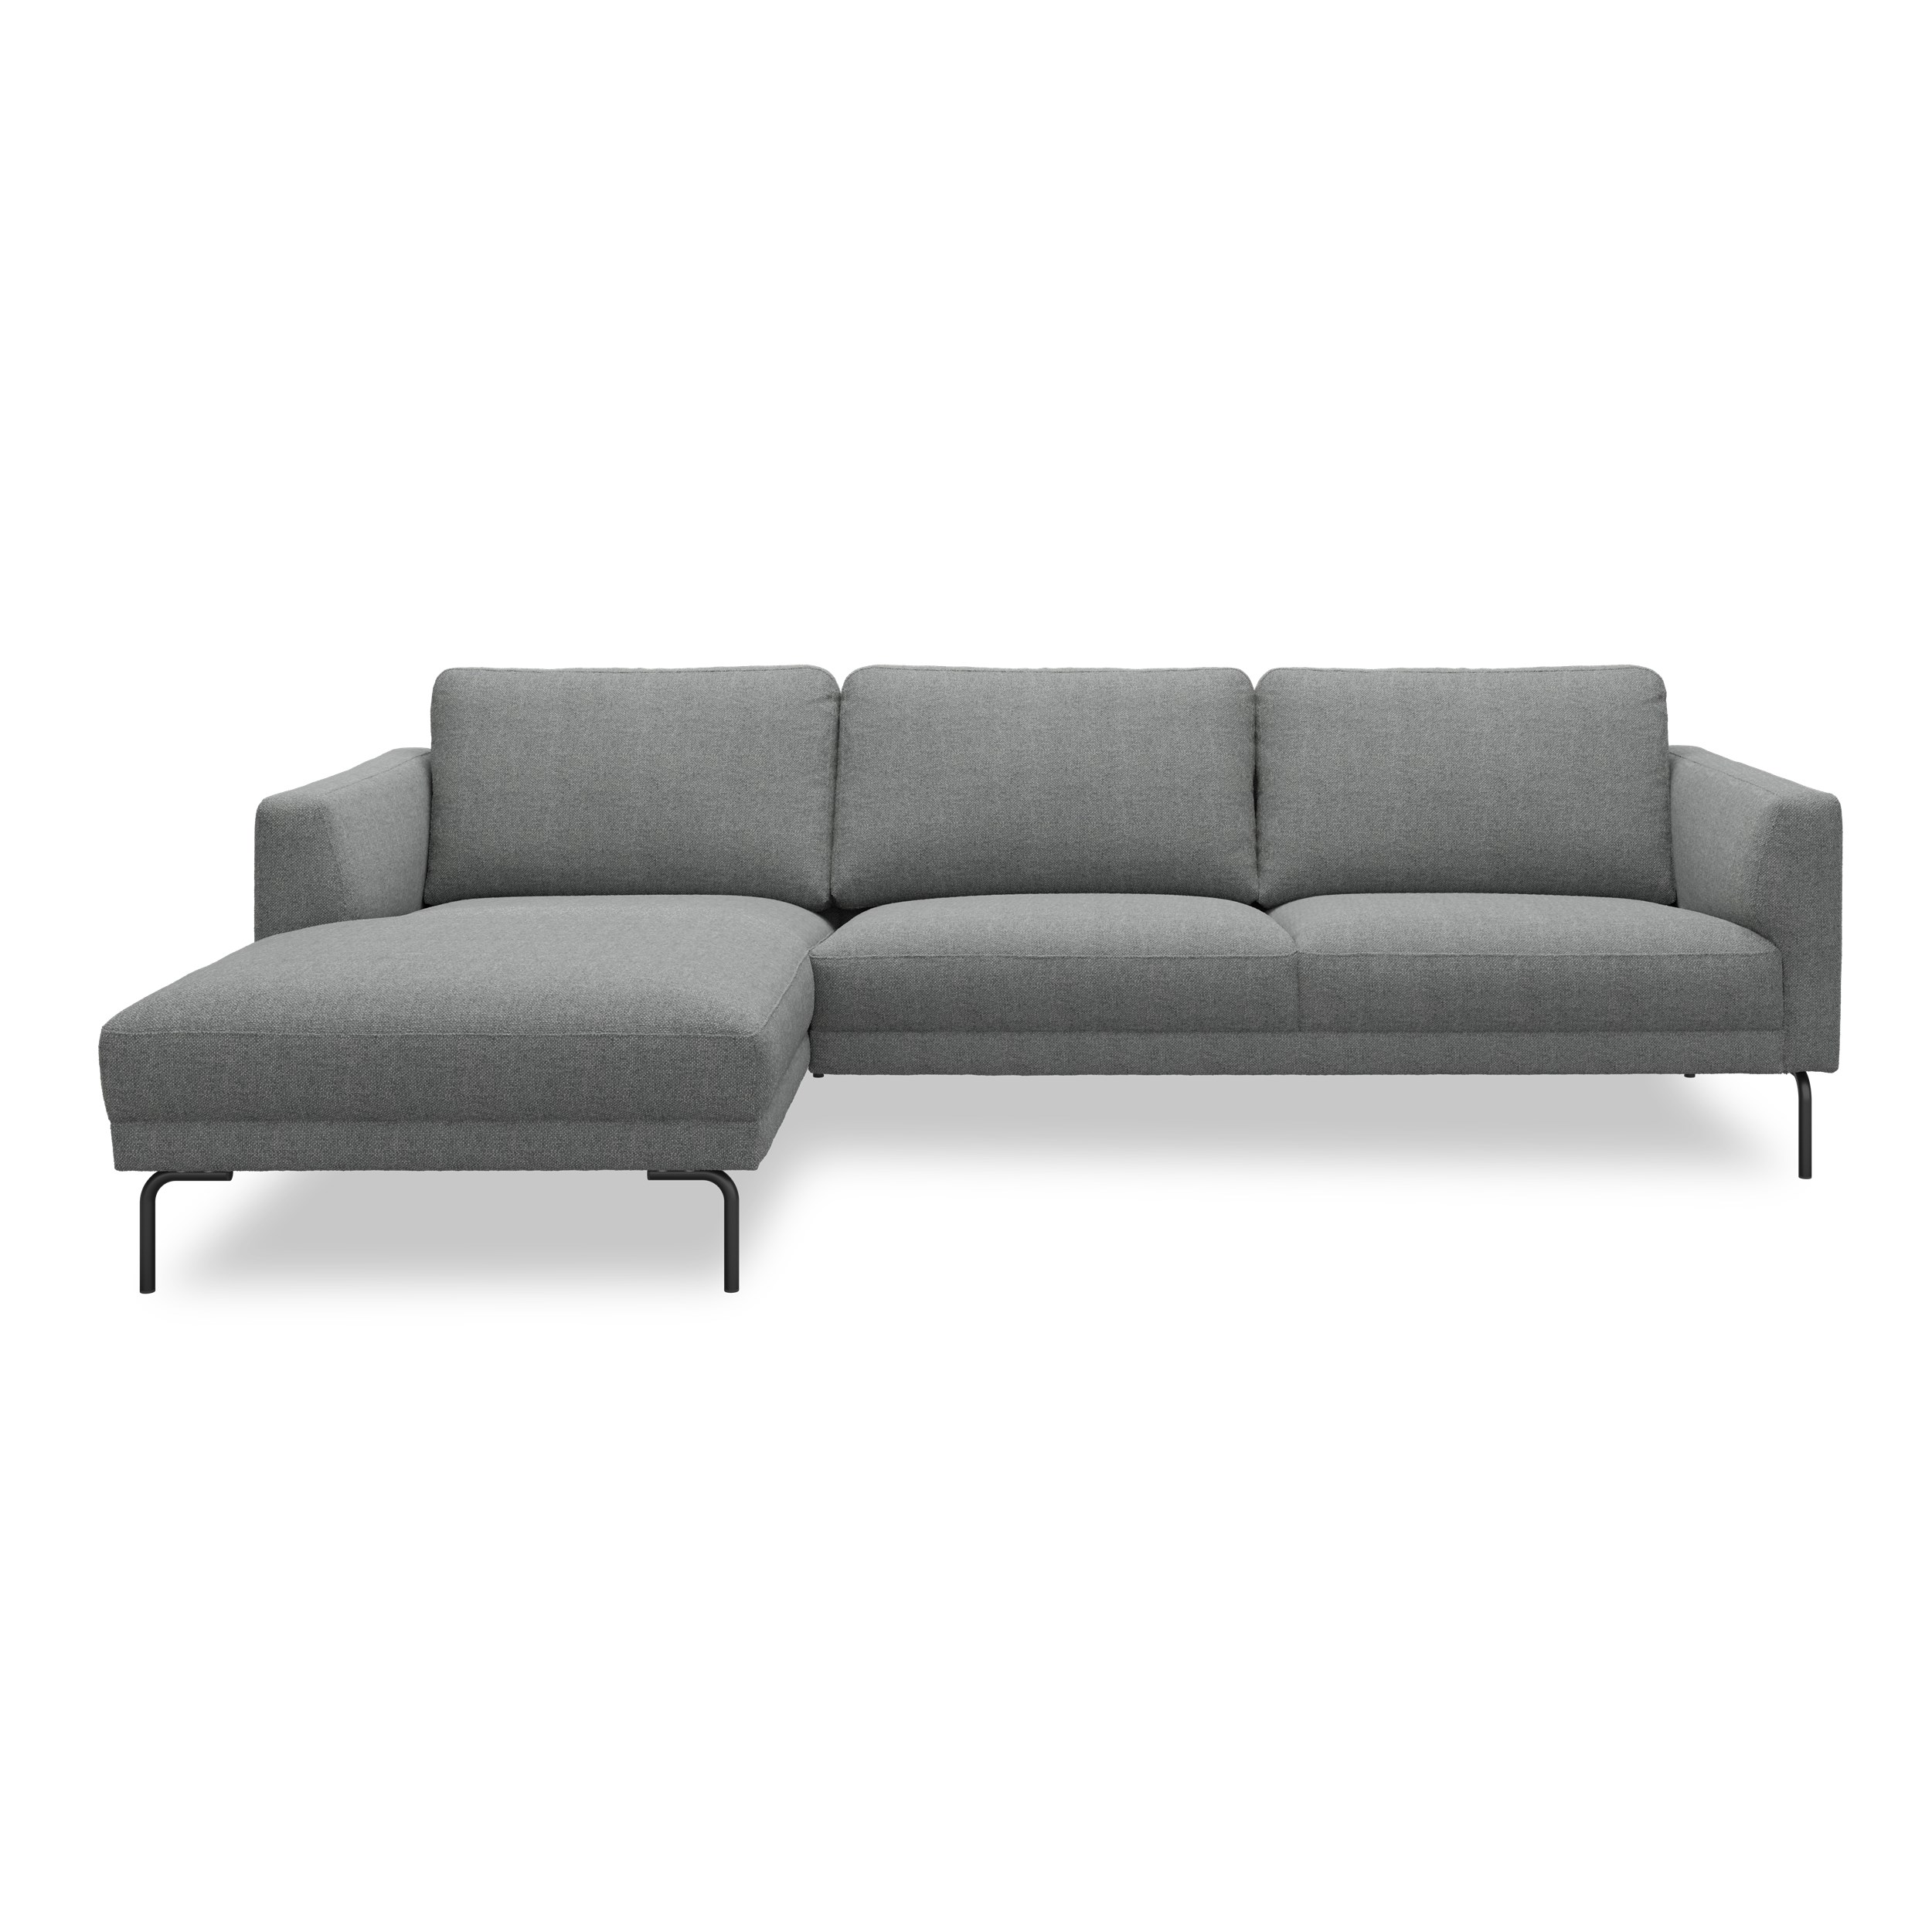 Springfield Sofa med chaiselong - Rate 167 Zinc stof og ben i sort metal